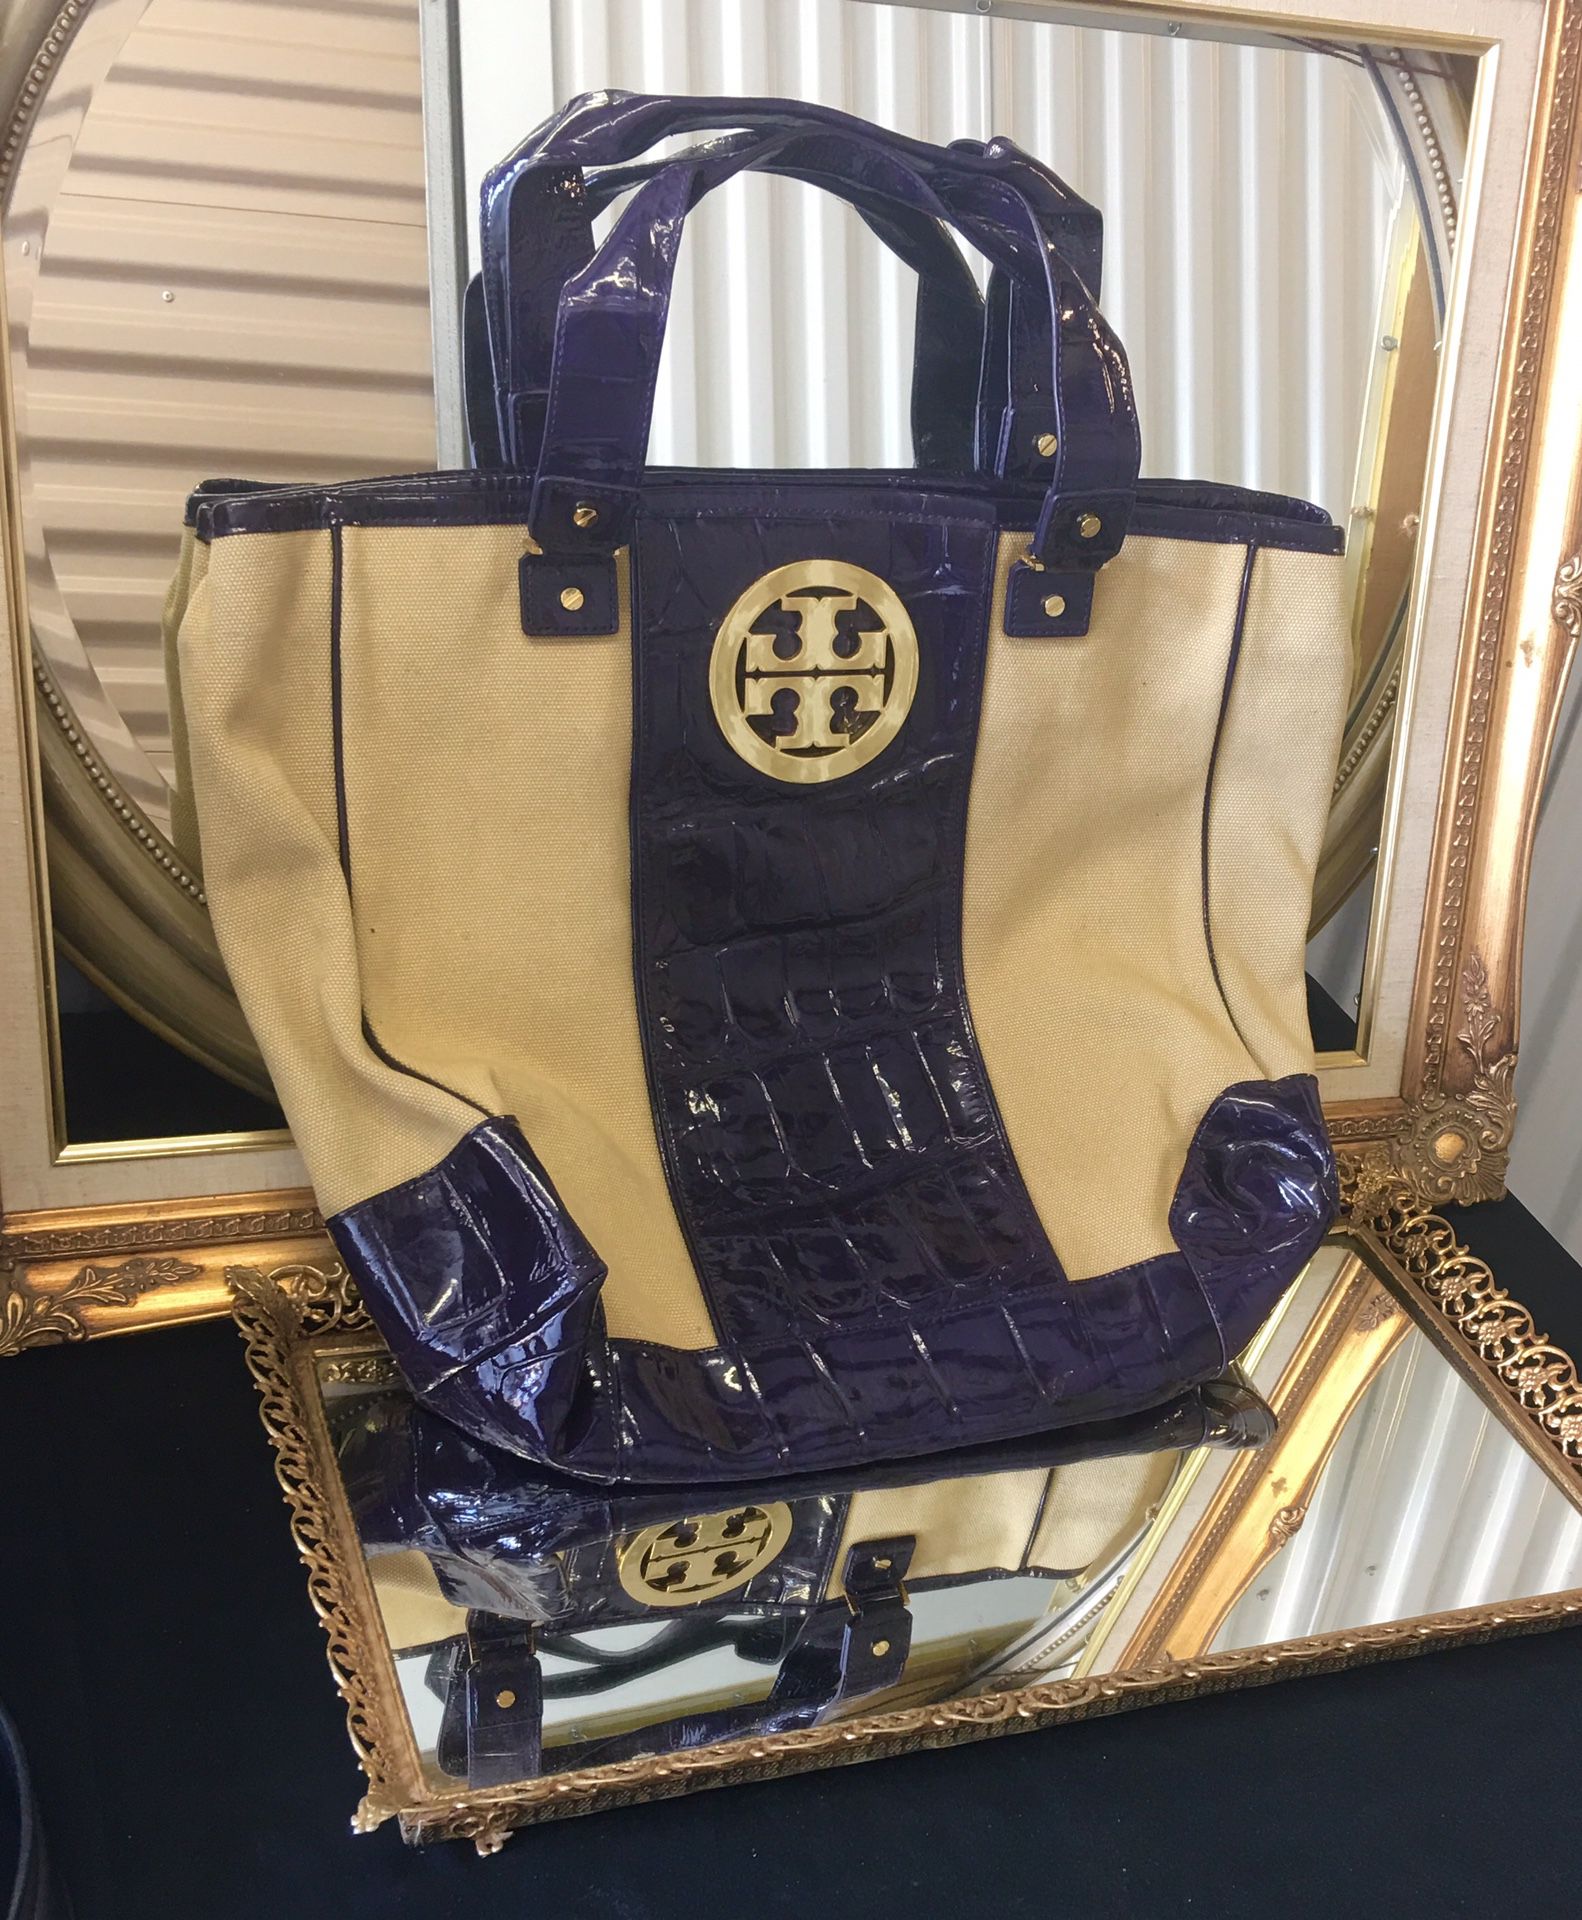 Authentic Tory Burch Beautiful Large Tote Purse Handbag Shoulder Bag Beige  Purple for Sale in Hidden Hills, CA - OfferUp